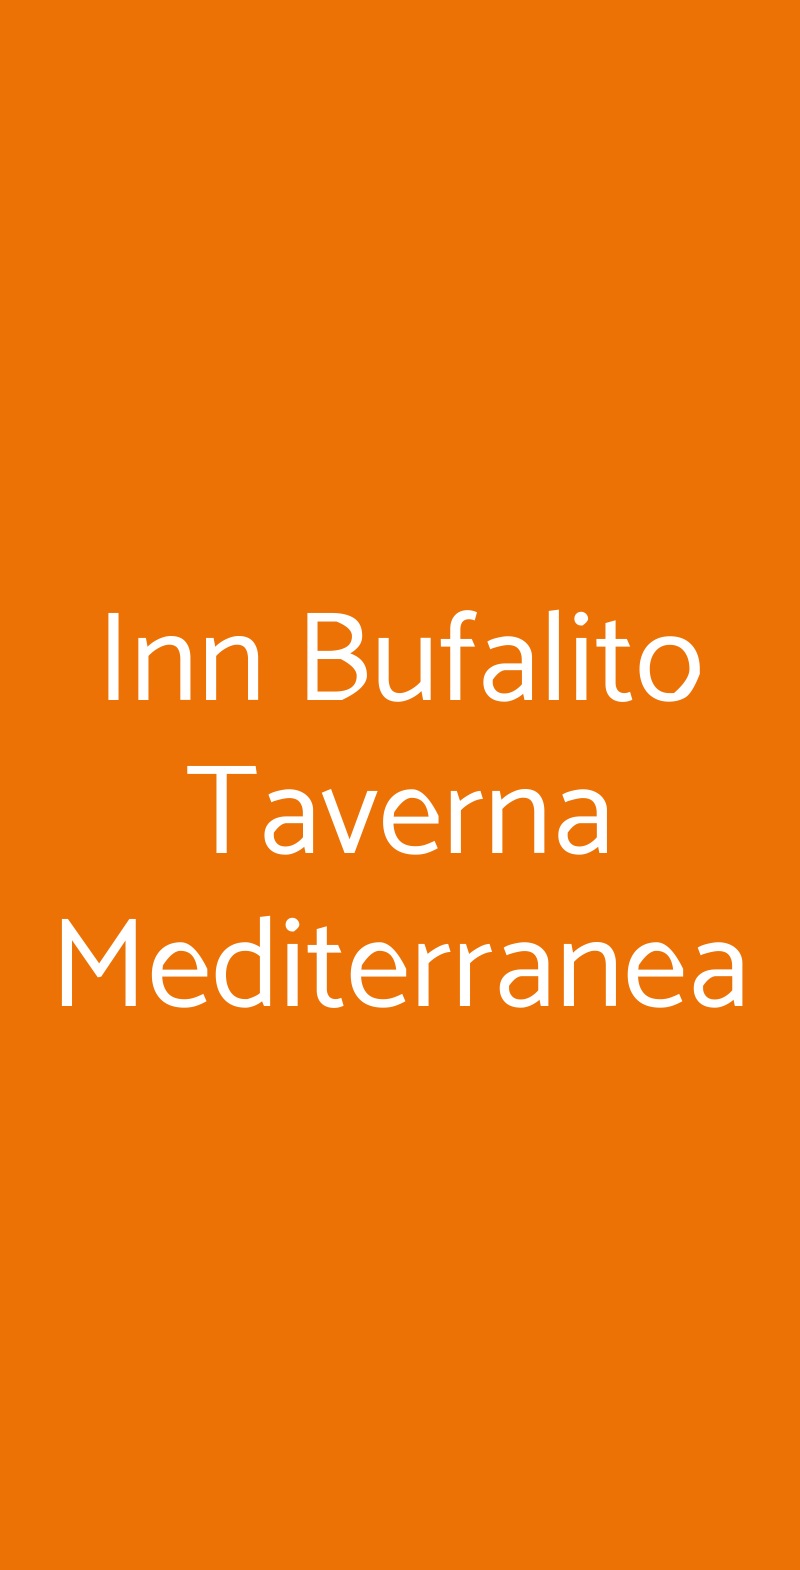 Inn Bufalito Taverna Mediterranea Sorrento menù 1 pagina